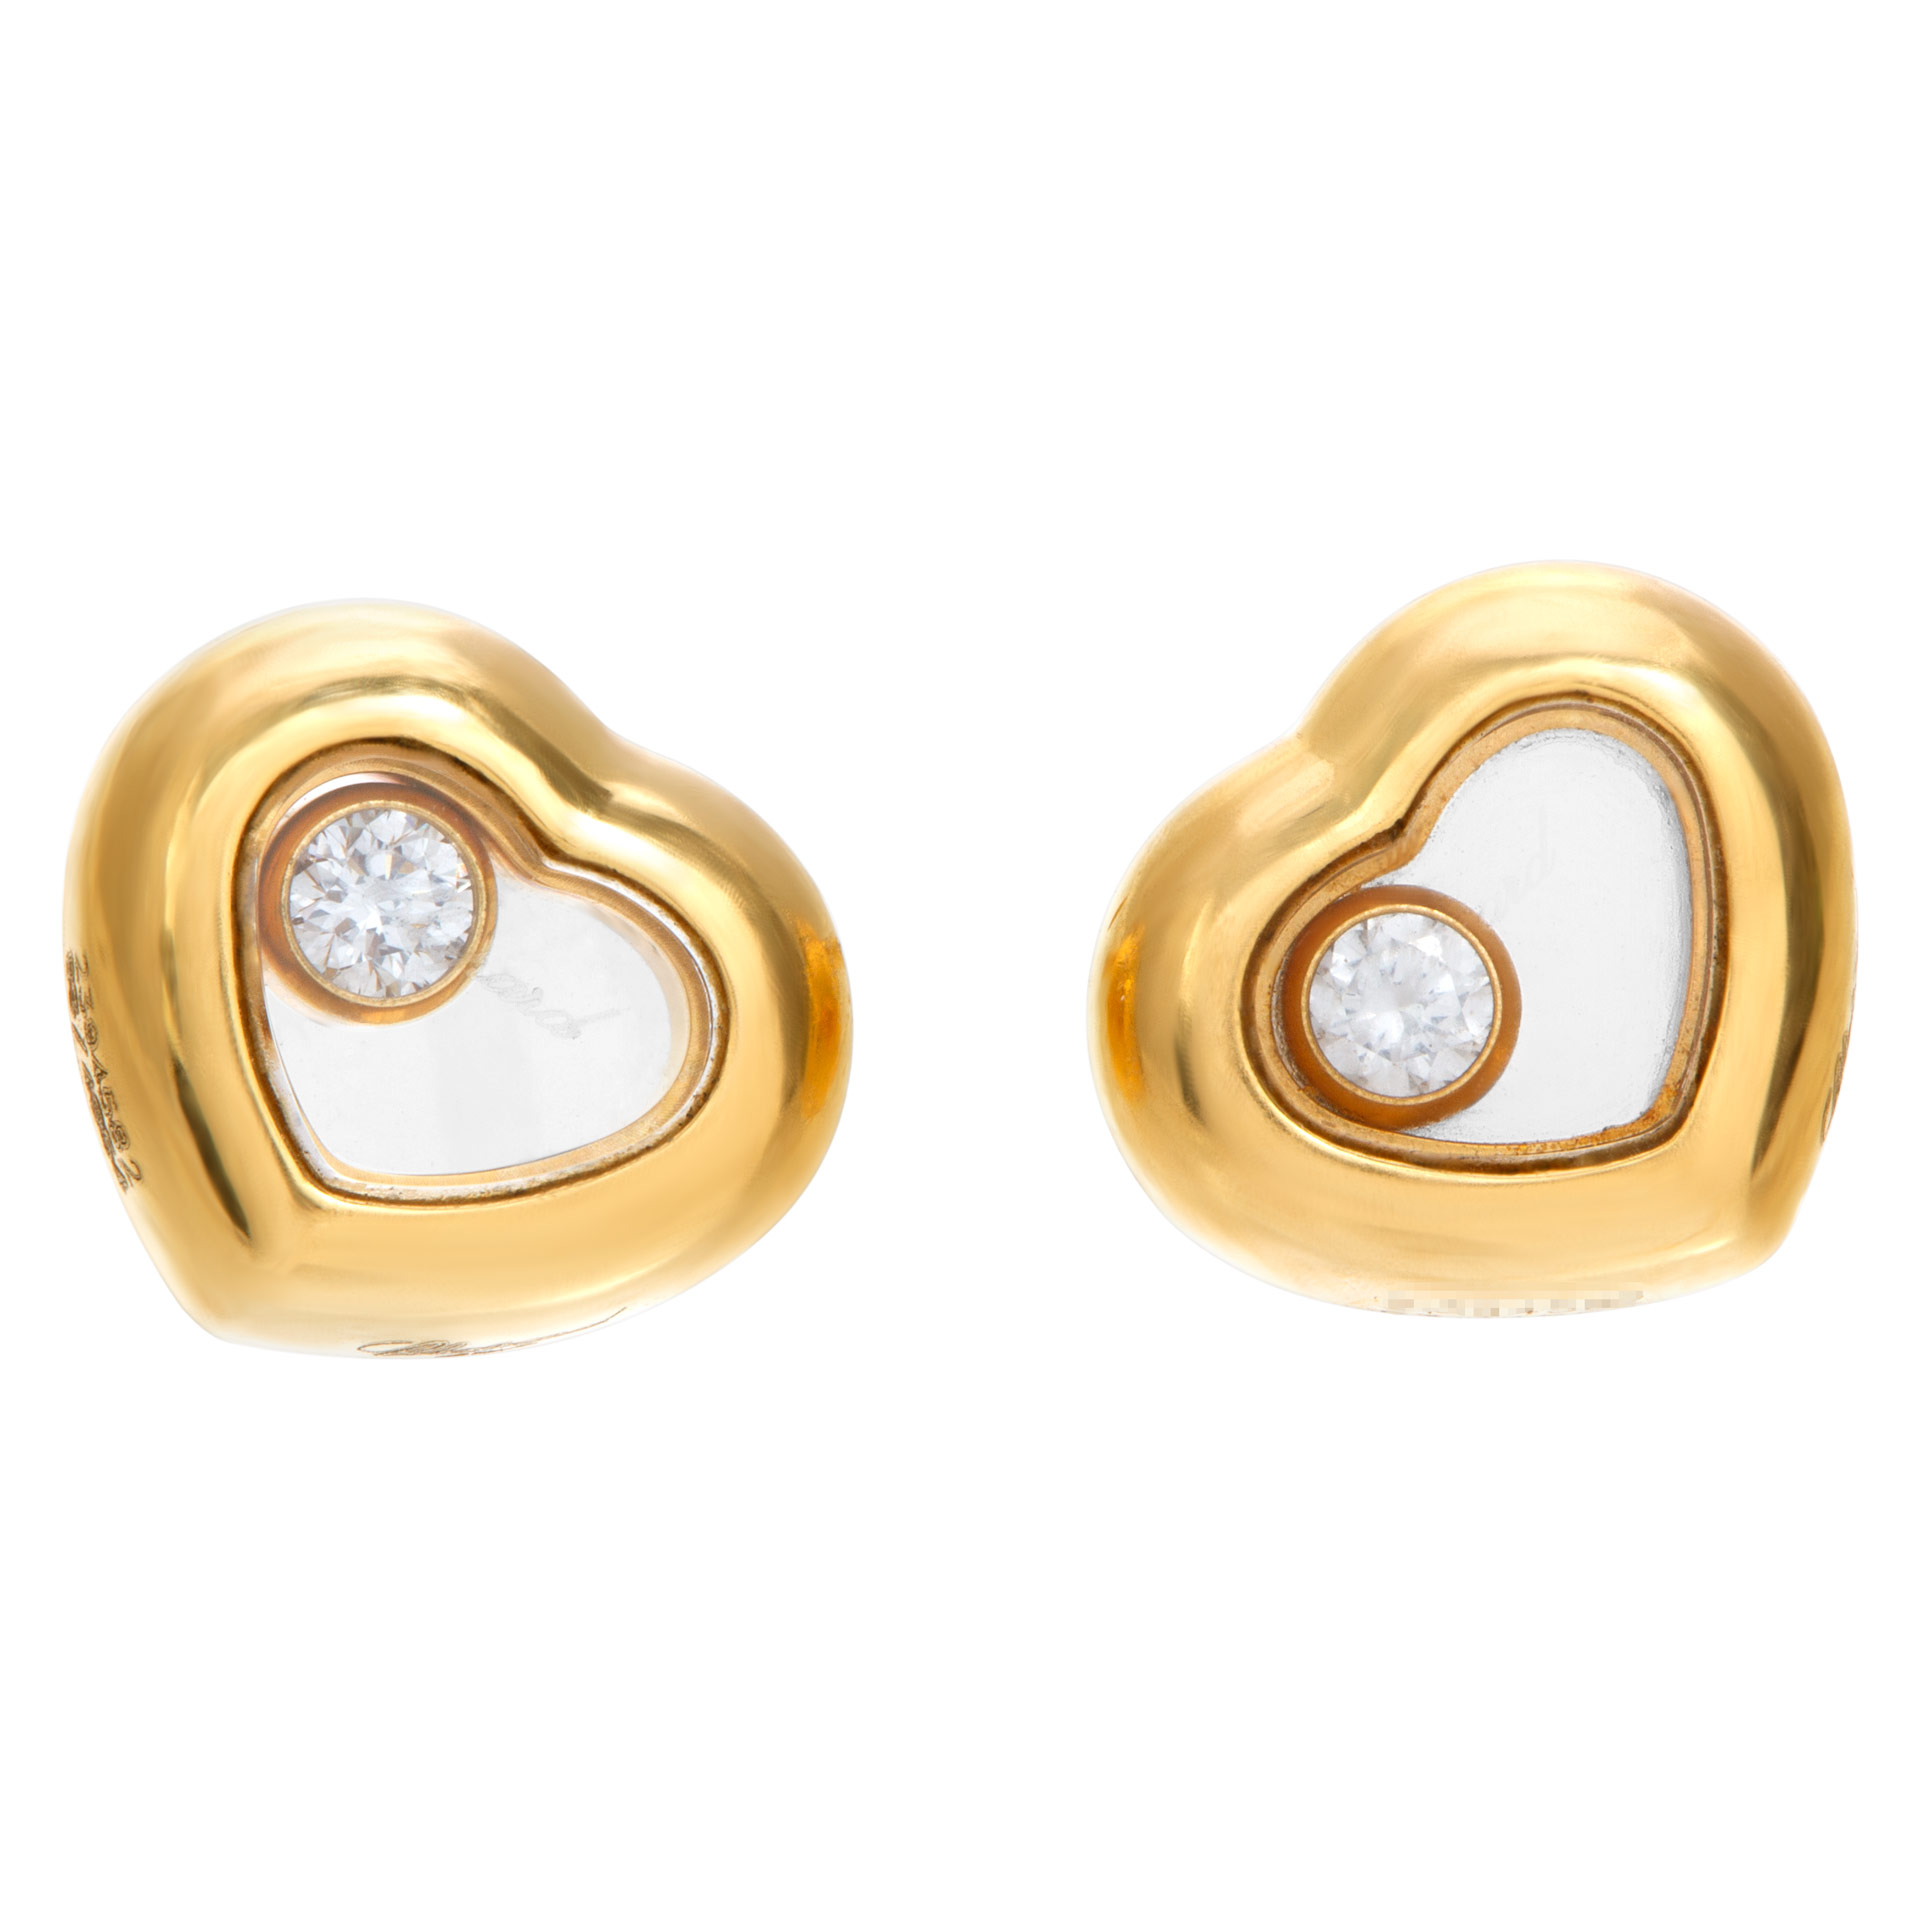 Chopard Icon earrings in 18k with single floating diamonds